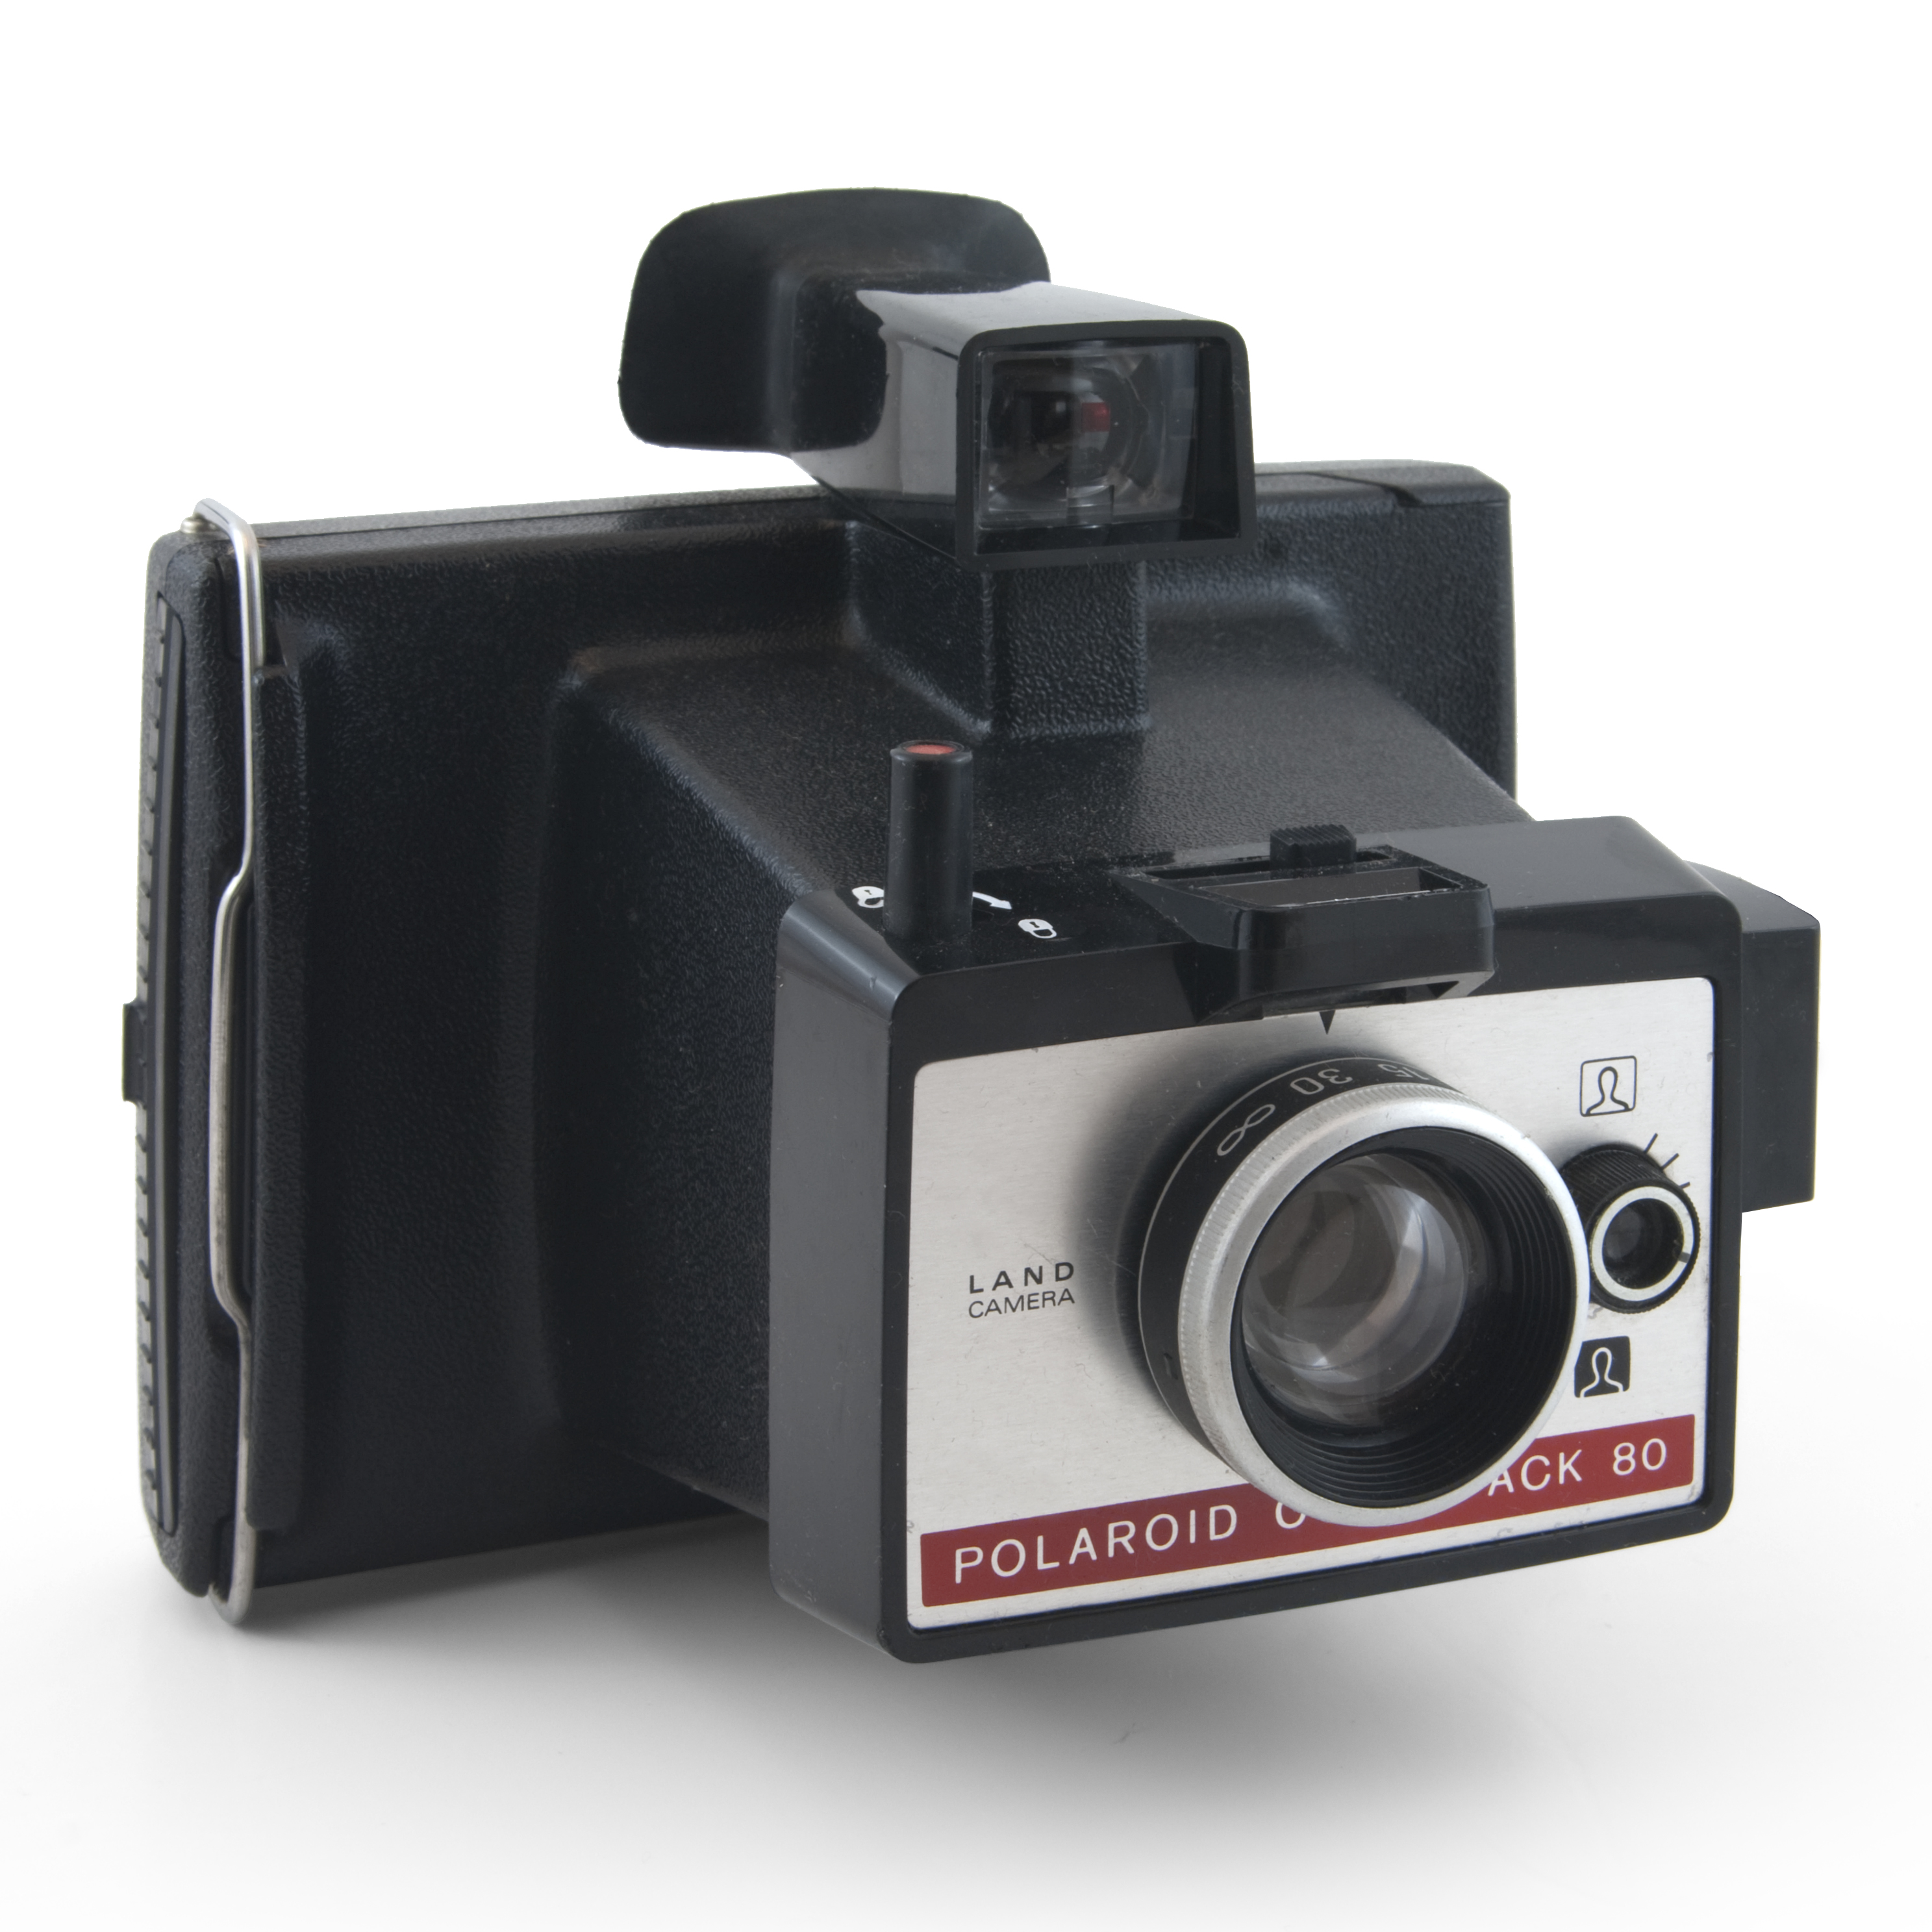 File:Polaroid Colorpack 80.jpg - Wikipedia